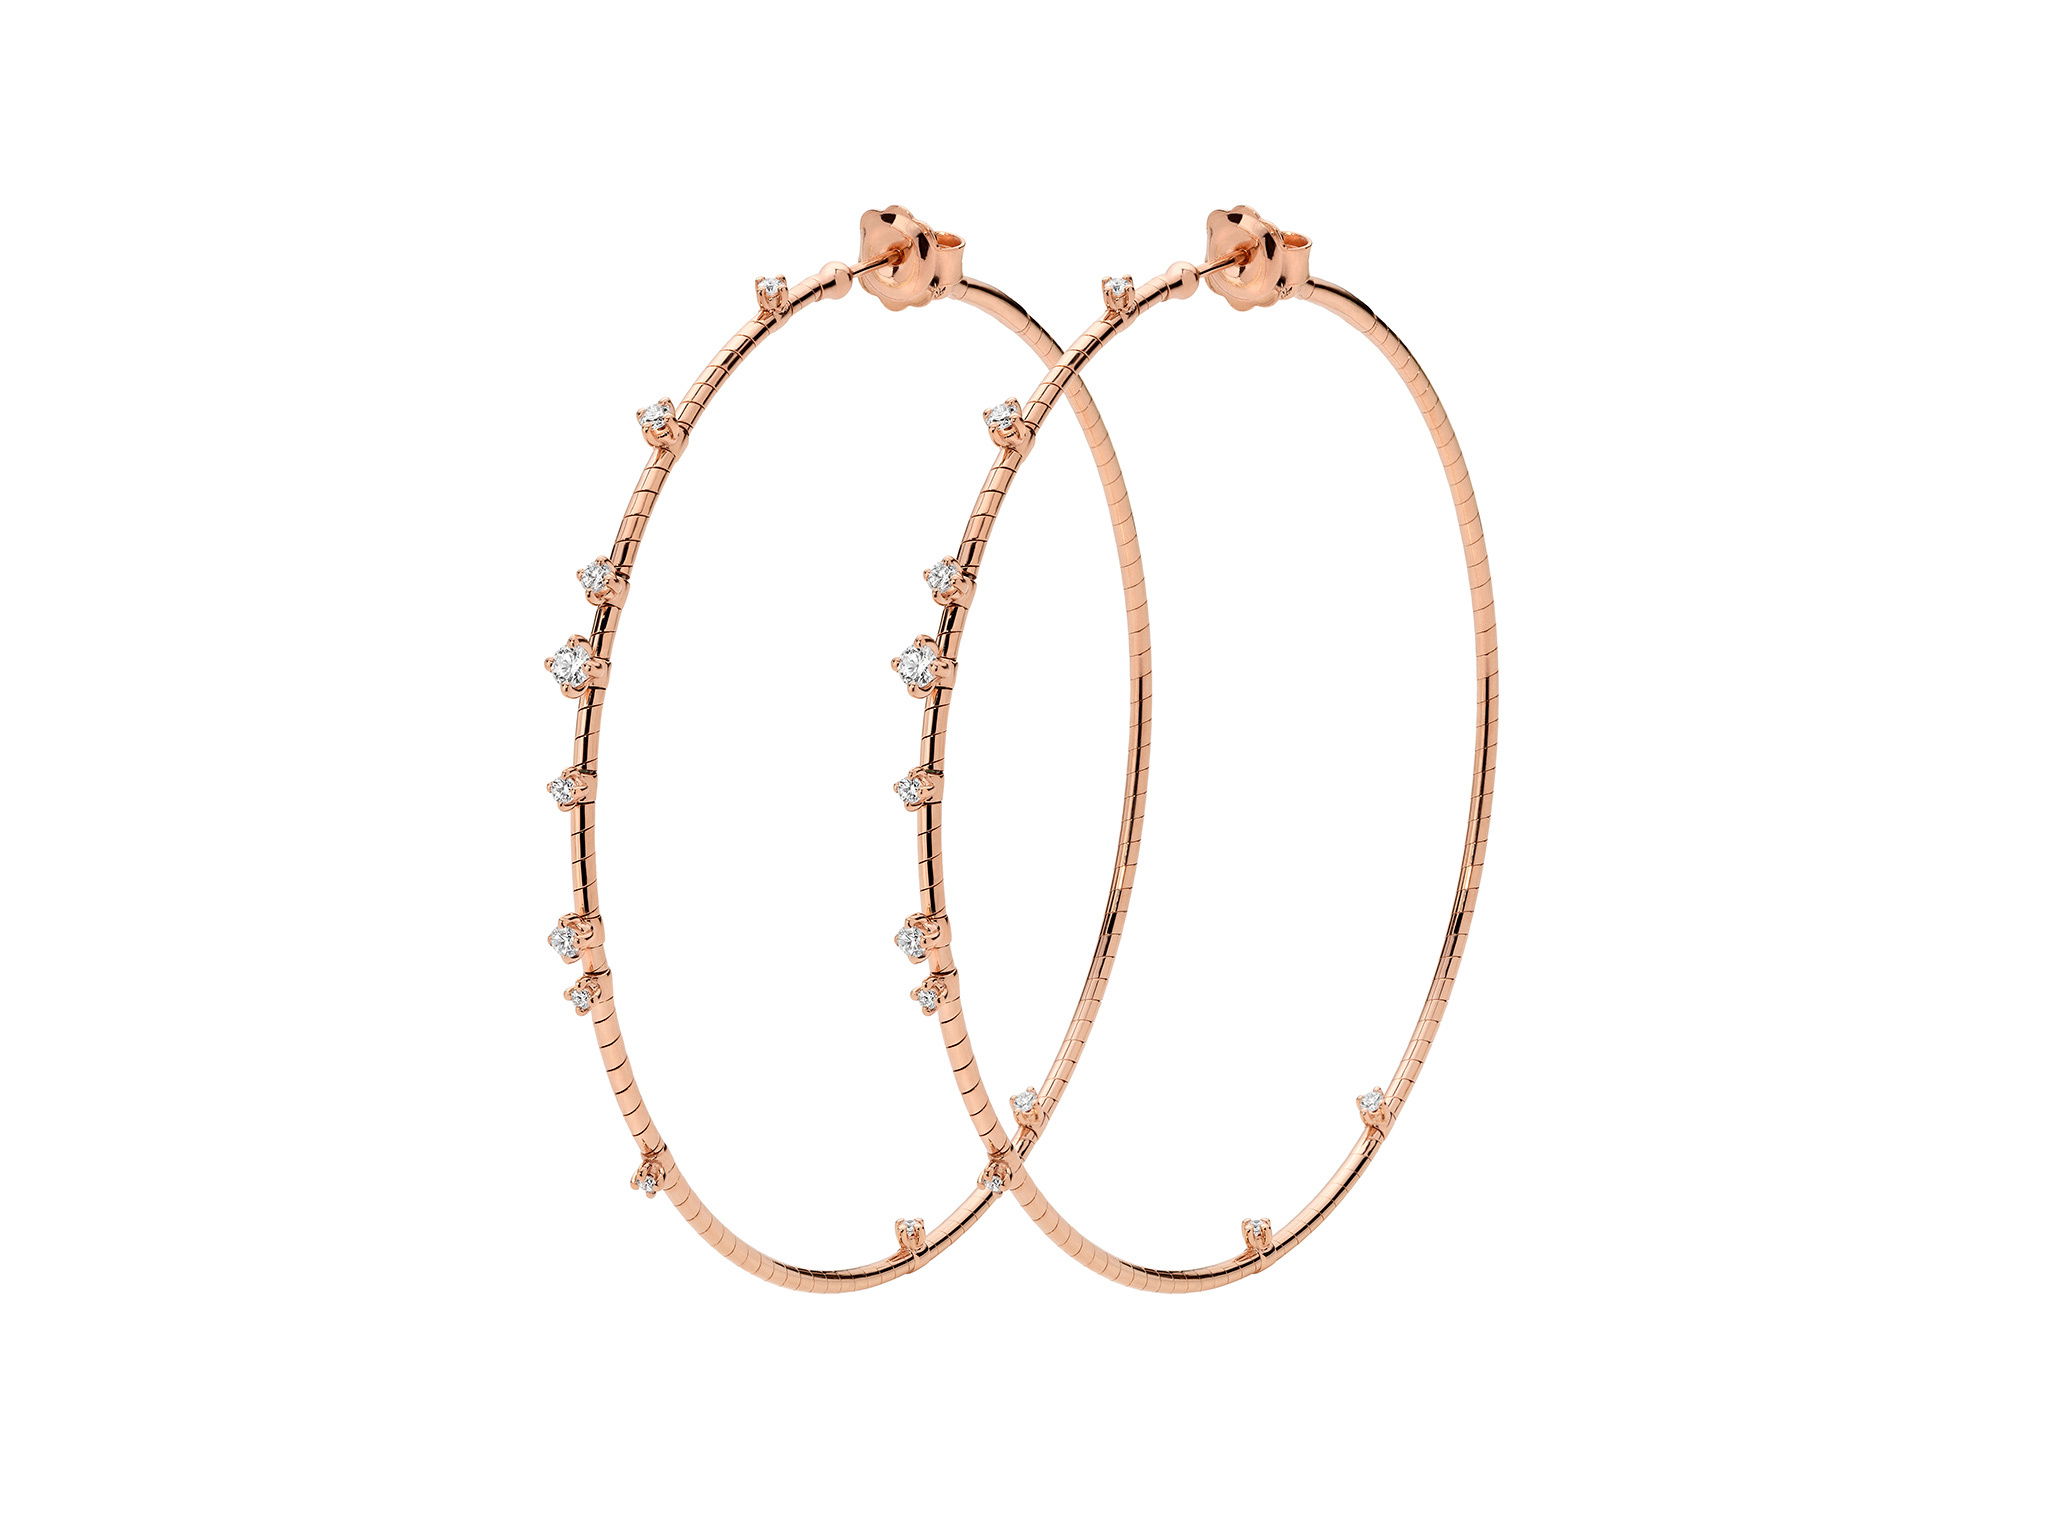 Rugiada Diamanti 6cm Hoop Earrings with White Diamonds in 18kt Pink Gold